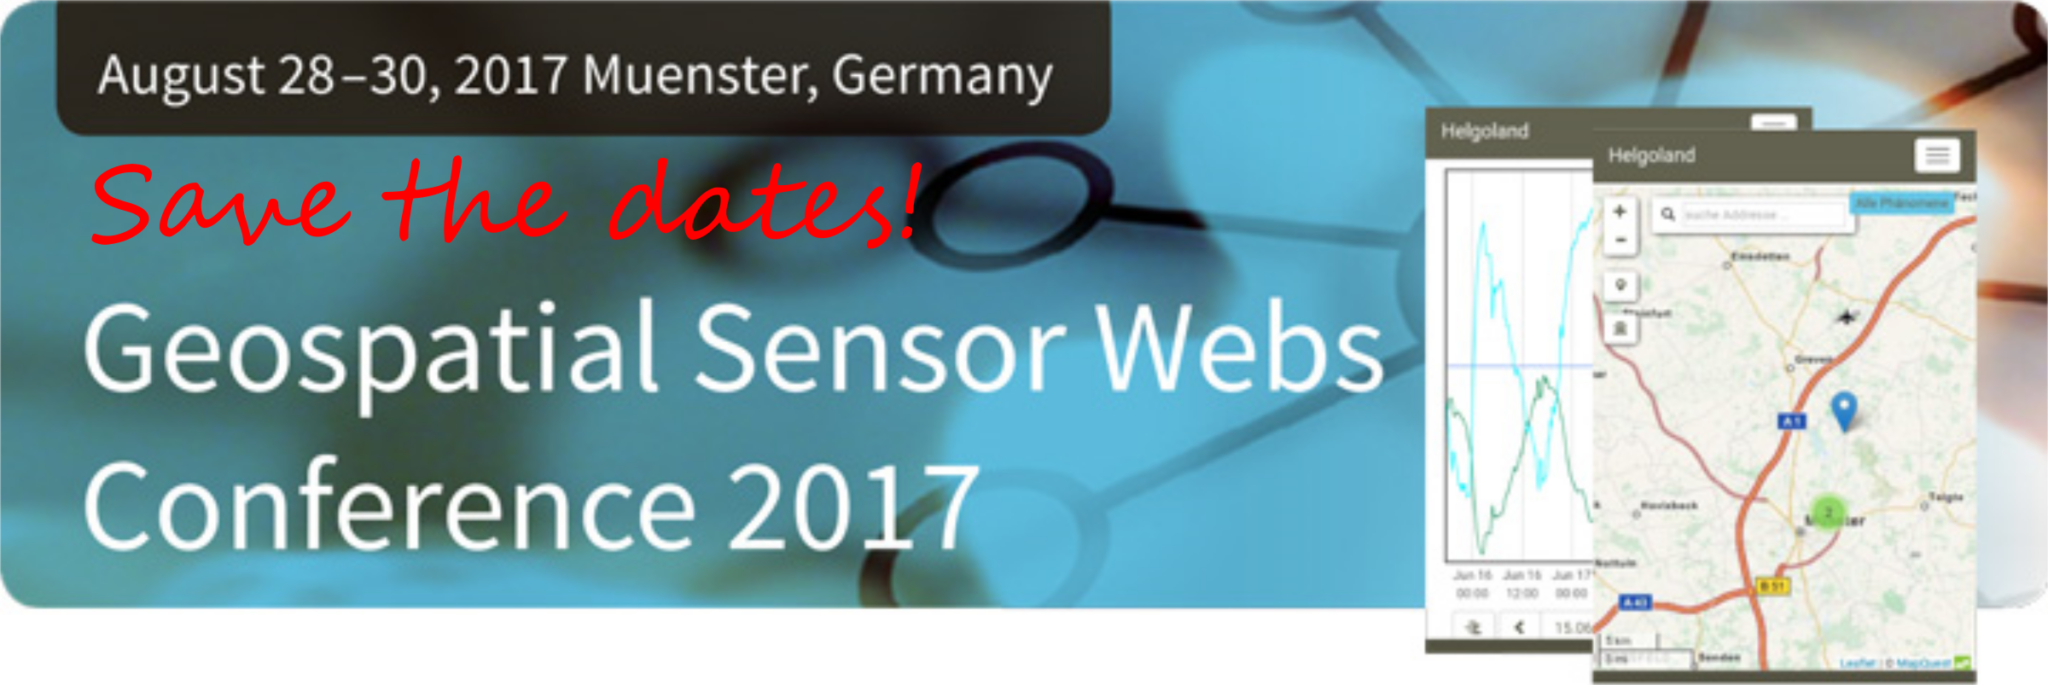 Geospatial Sensor Webs 2017 – save the dates!